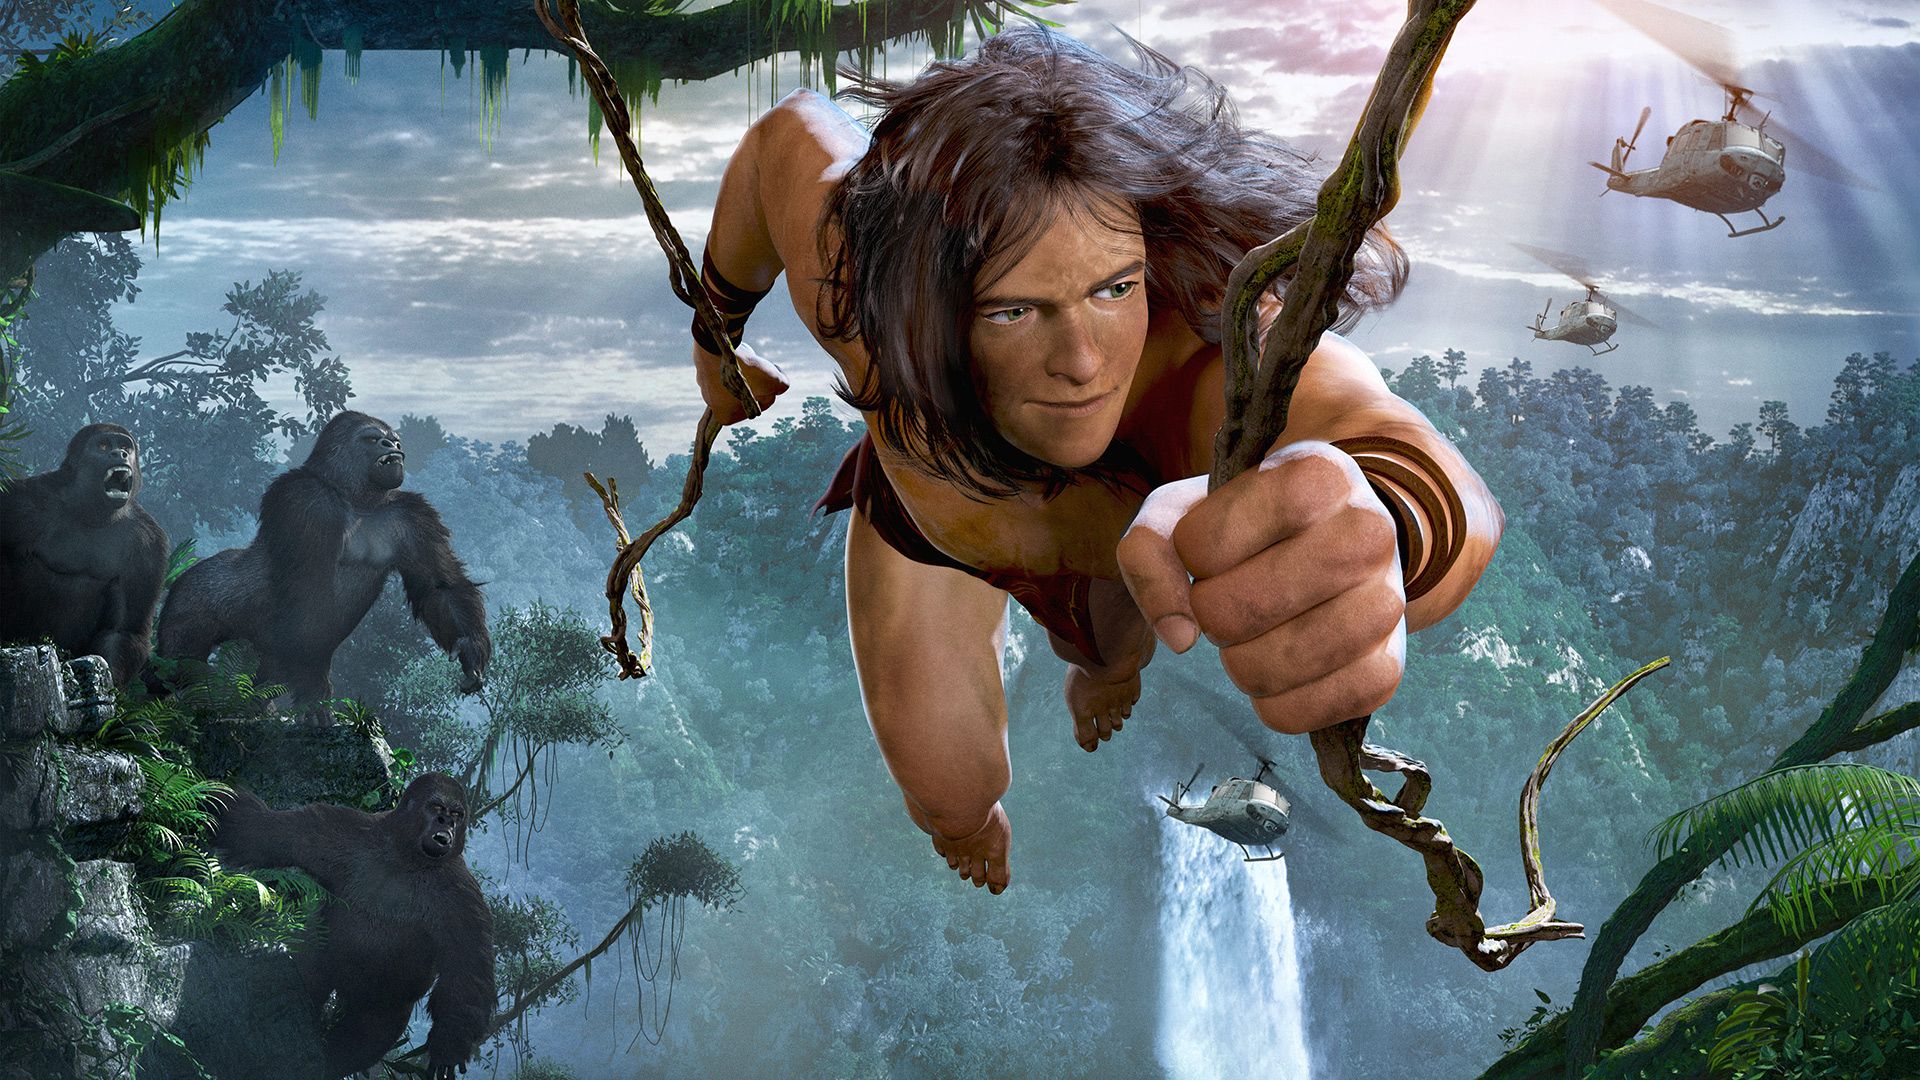 Tarzan background